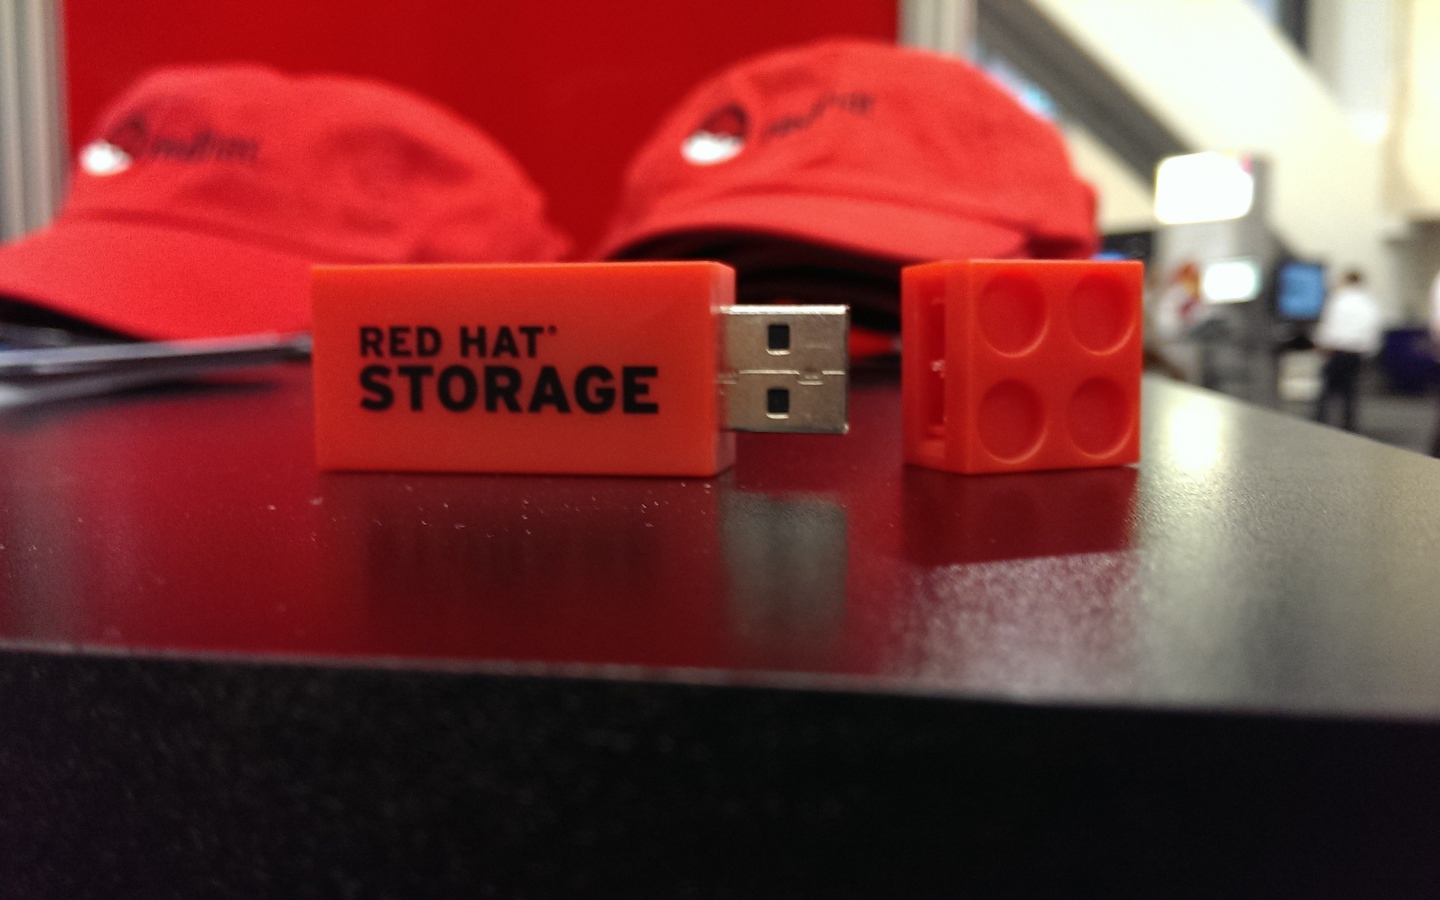 Flash card running Red Hat